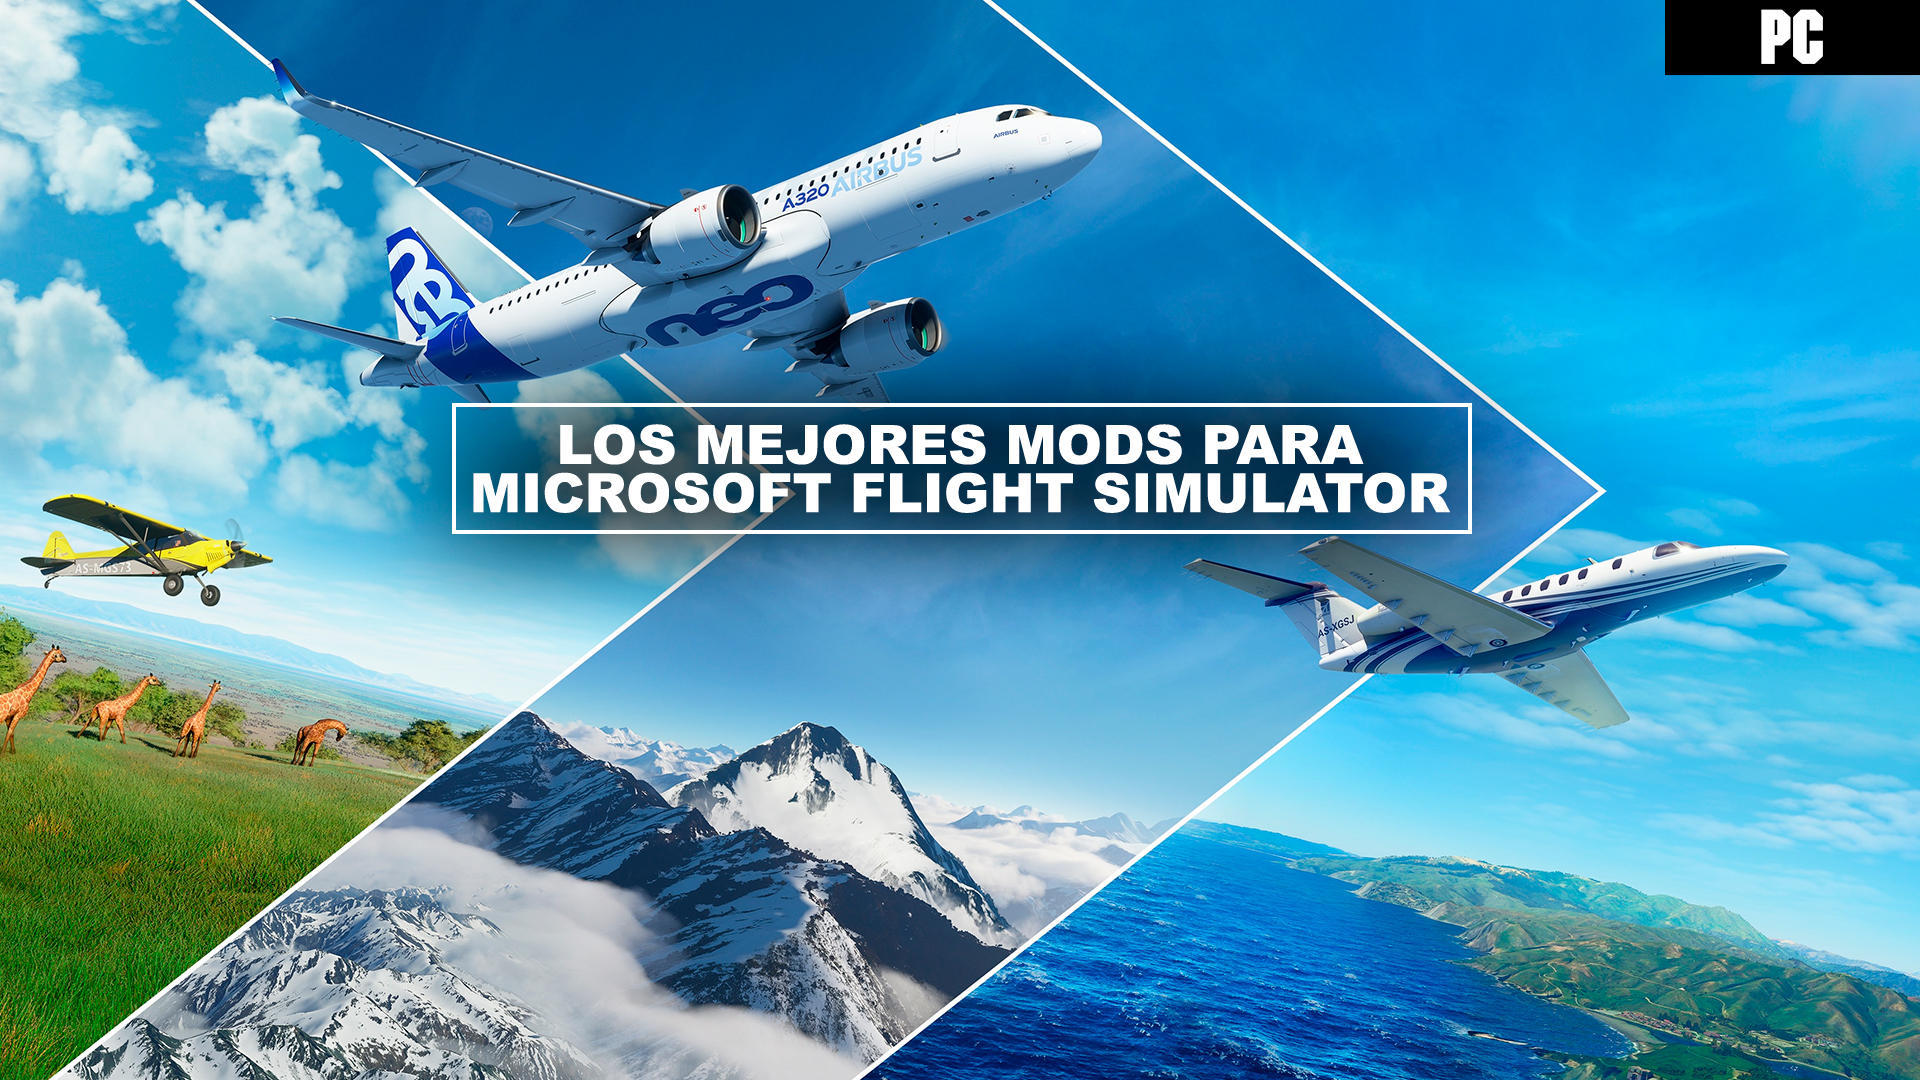 Los mejores mods para Microsoft Flight Simulator